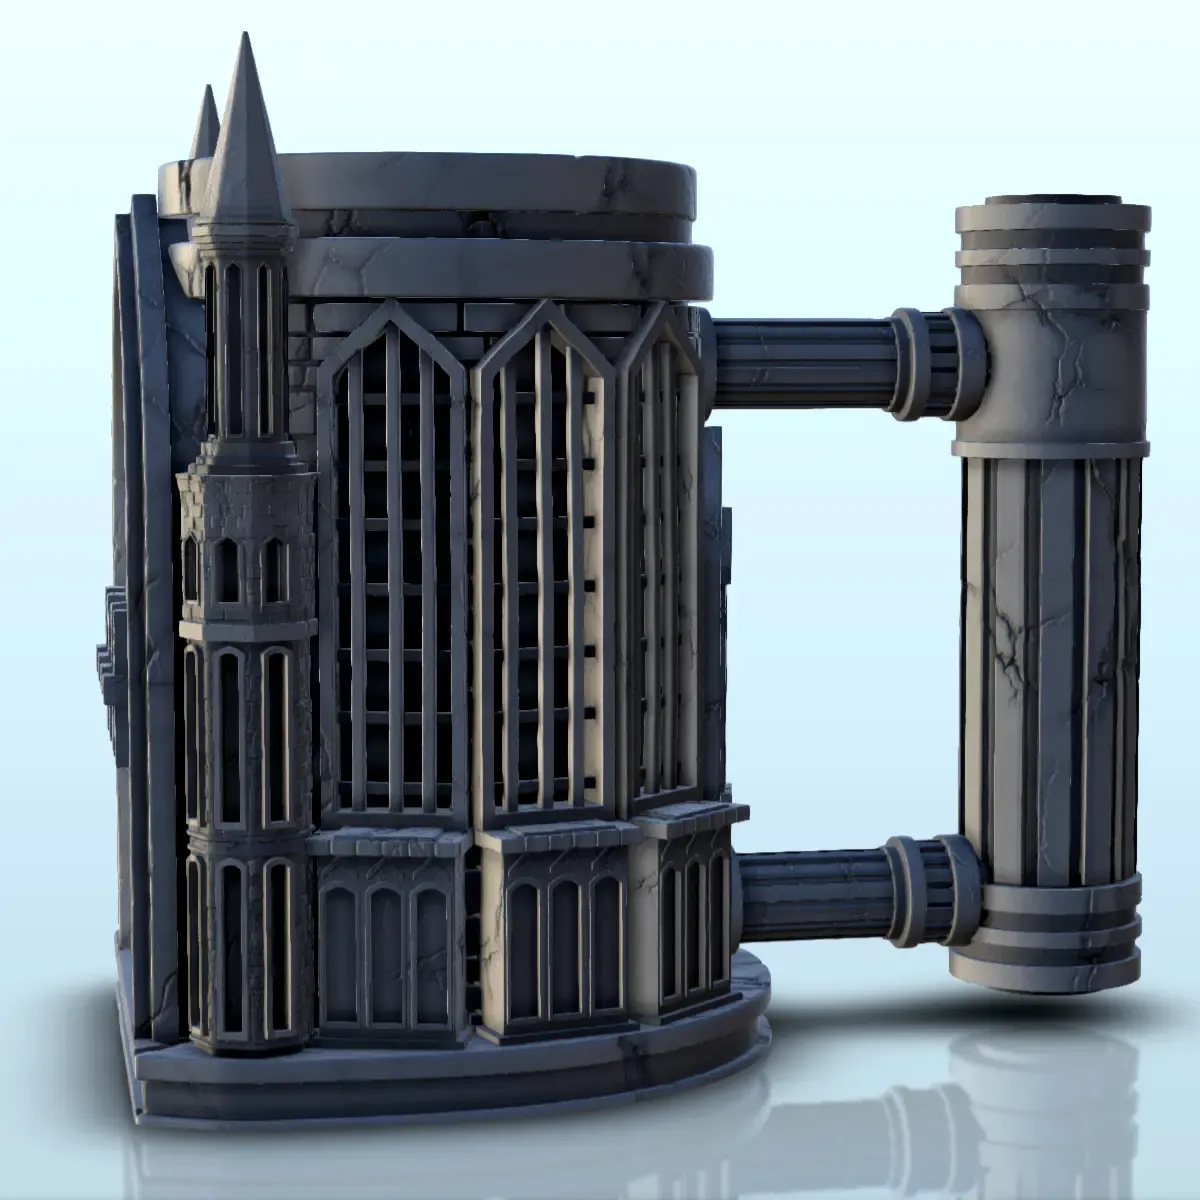 Gothic castle dice mug (13) - beer can holder